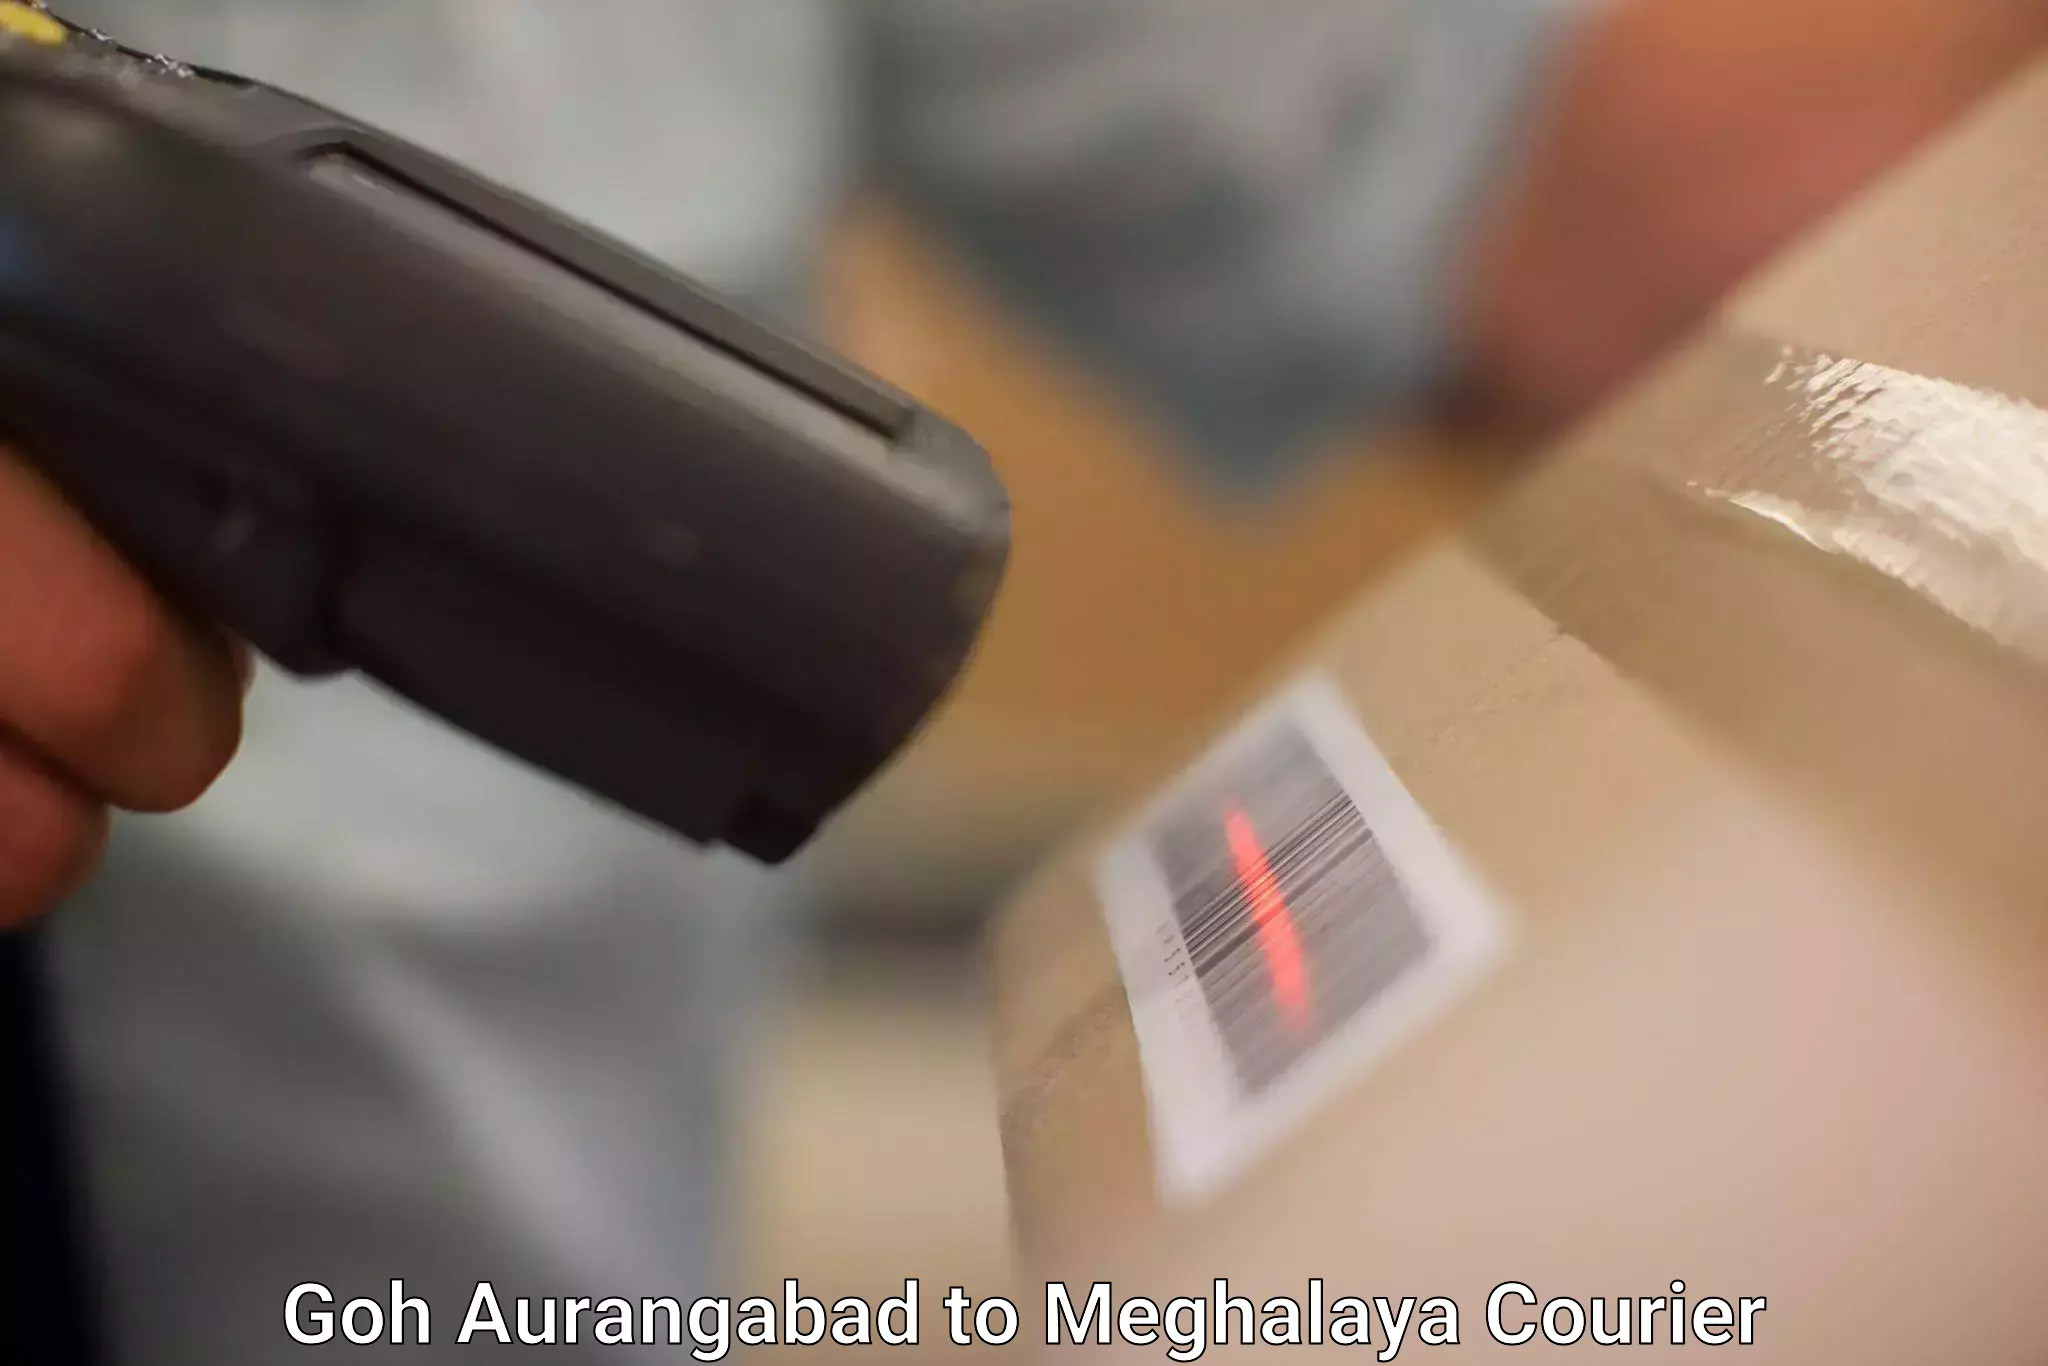 Overnight delivery services Goh Aurangabad to Meghalaya